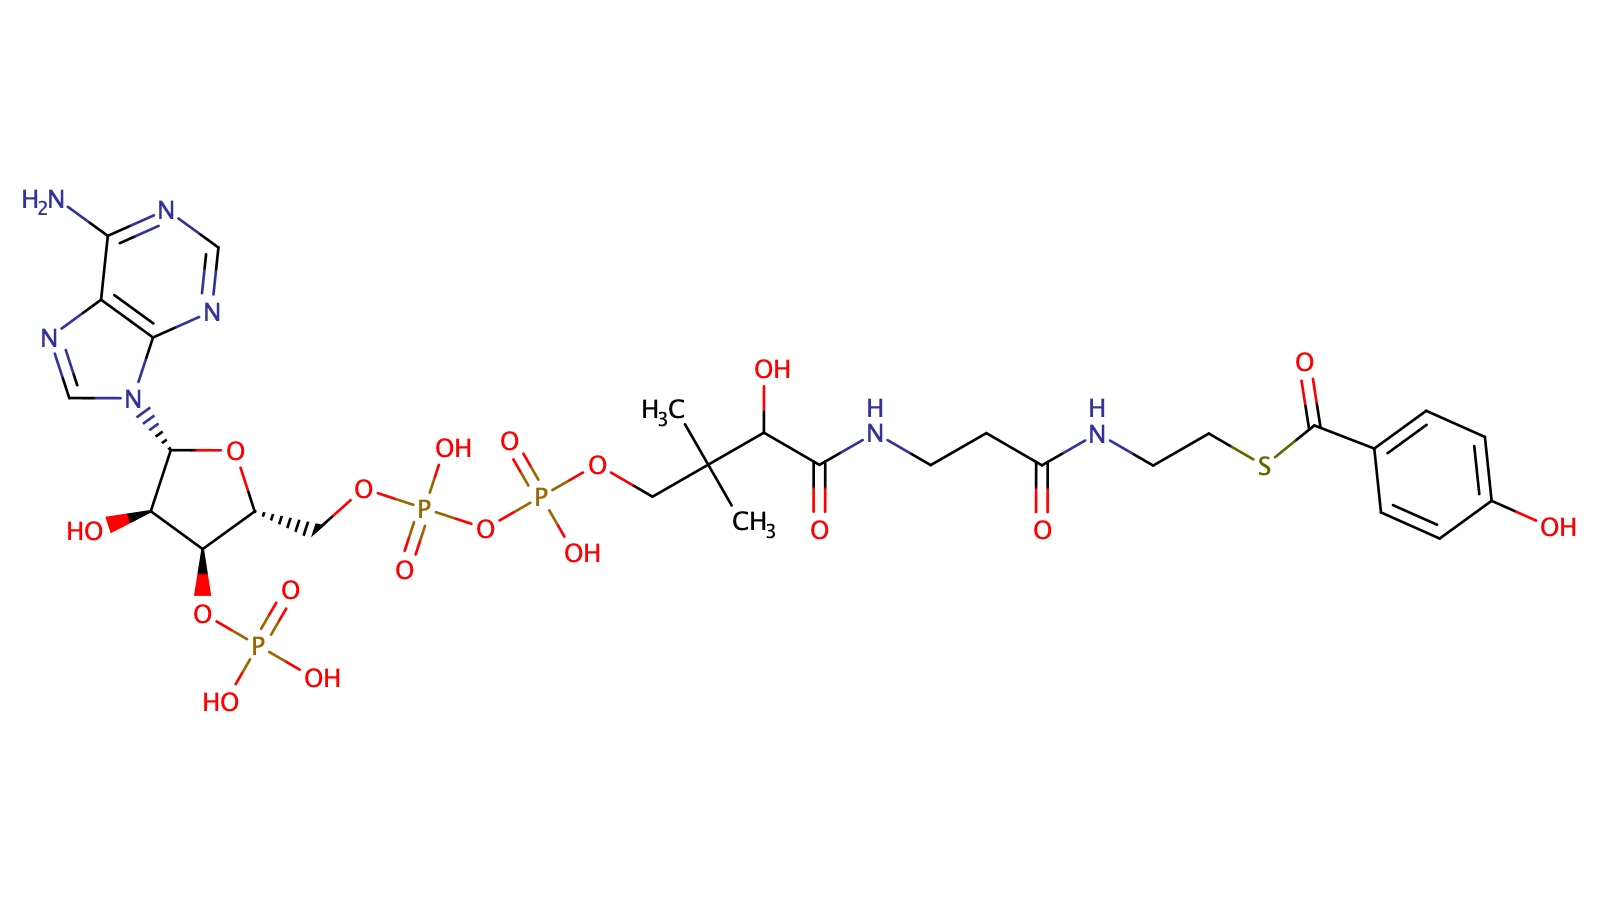 4-hydroxybenzoyl-Coenzyme A